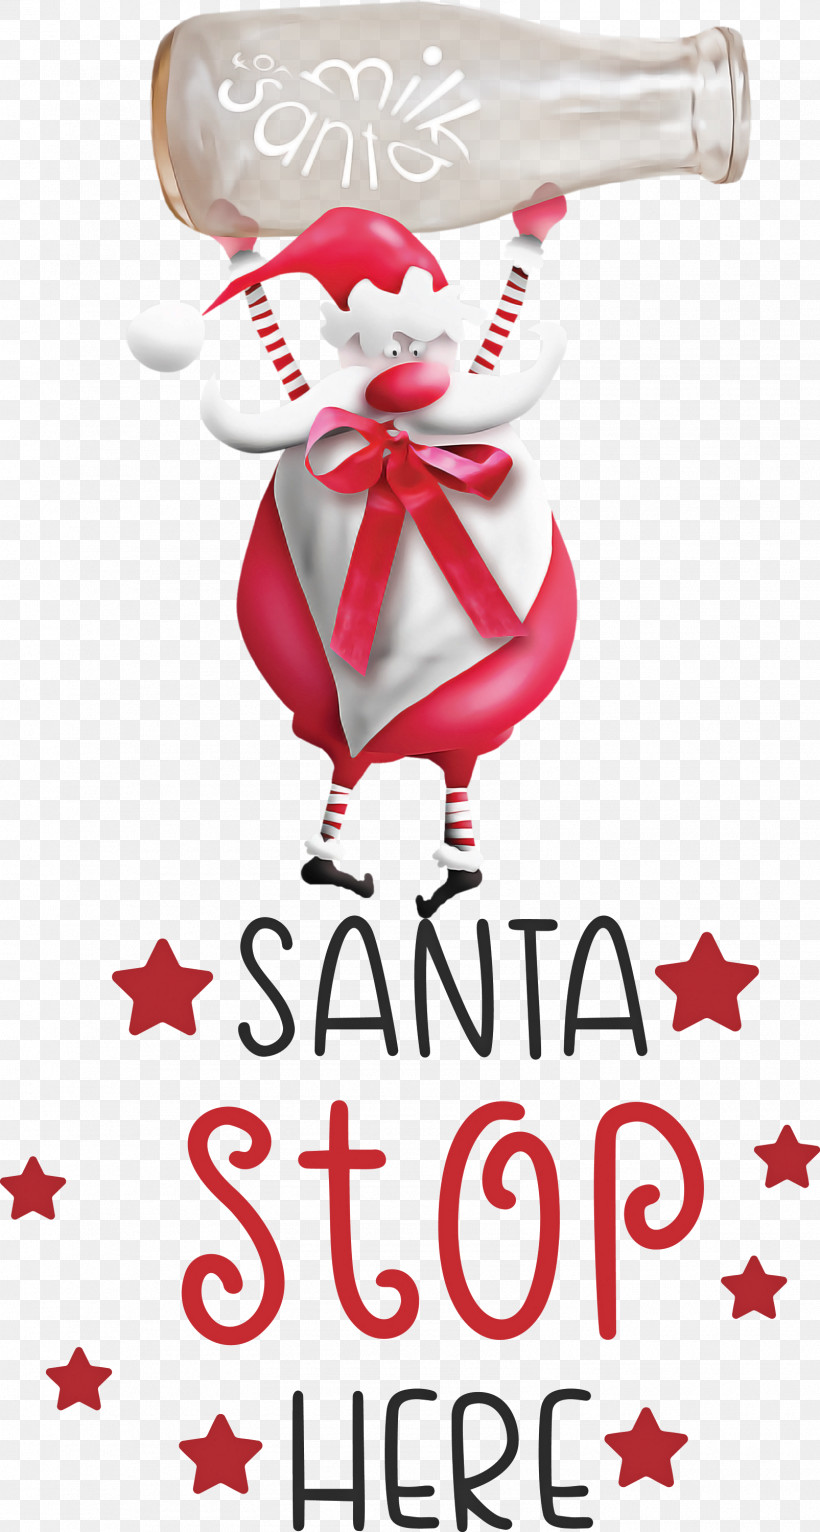 Santa Stop Here Santa Christmas, PNG, 1605x2999px, Santa Stop Here, Character, Christmas, Christmas Day, Christmas Ornament Download Free